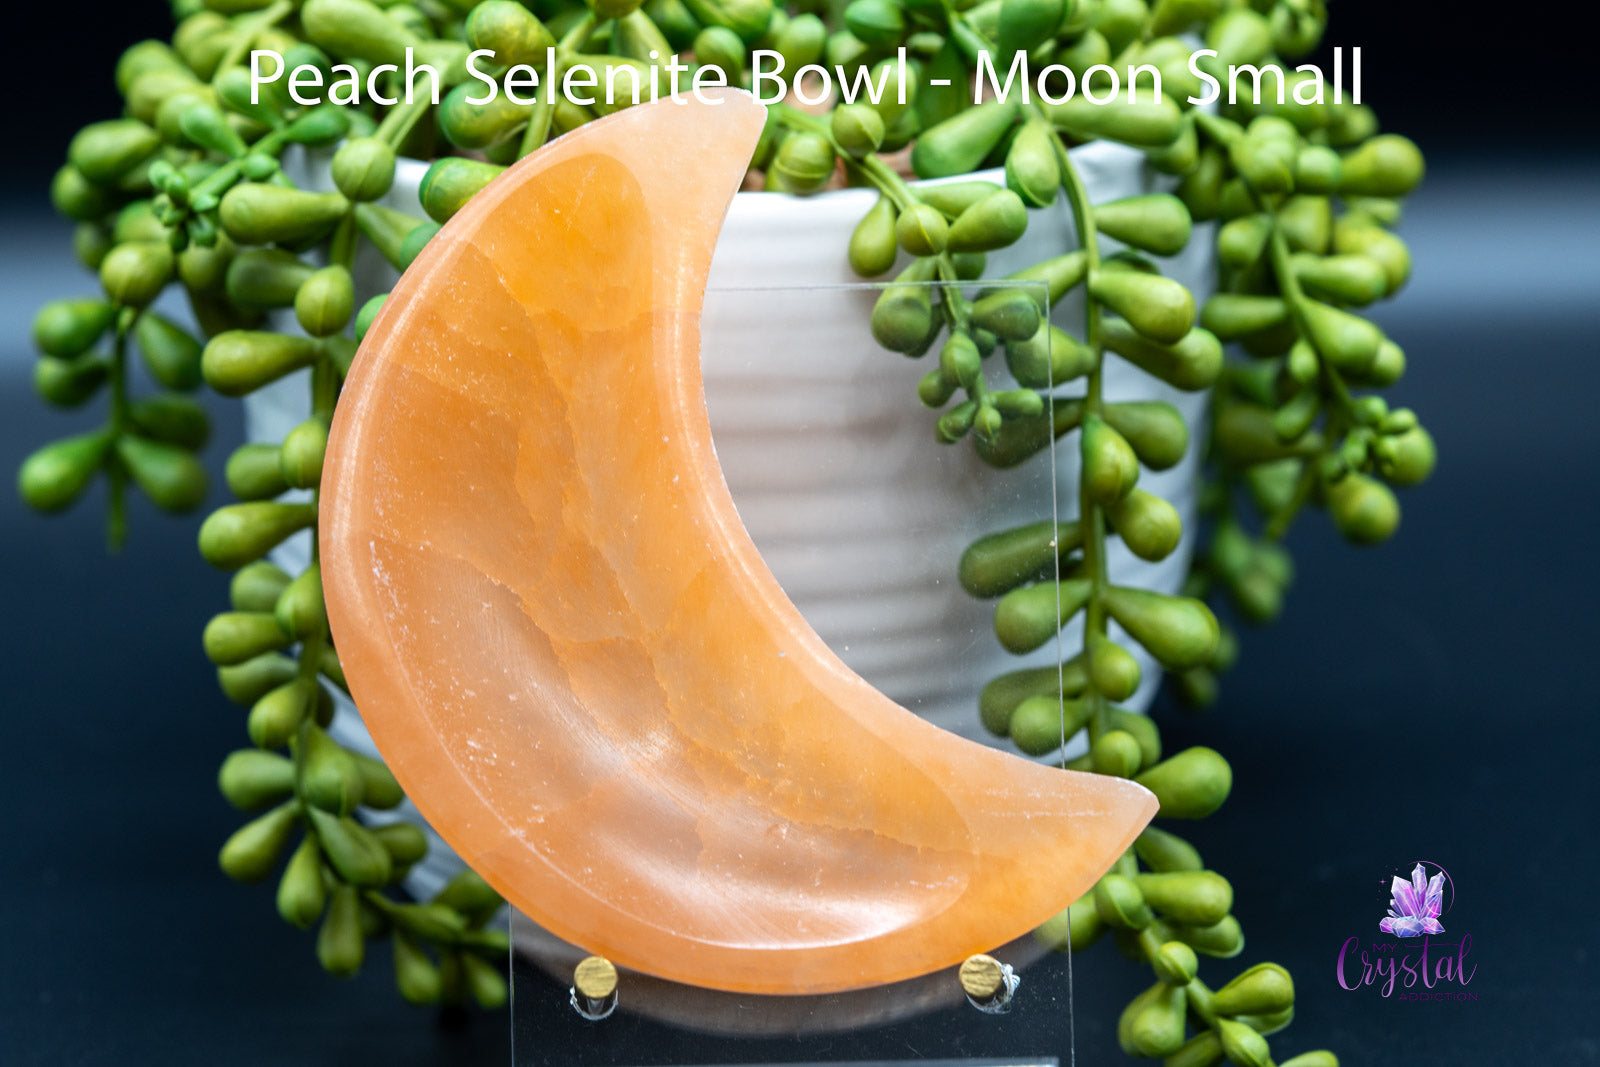 Peach Selenite Bowl - Moon 4" - My Crystal Addiction